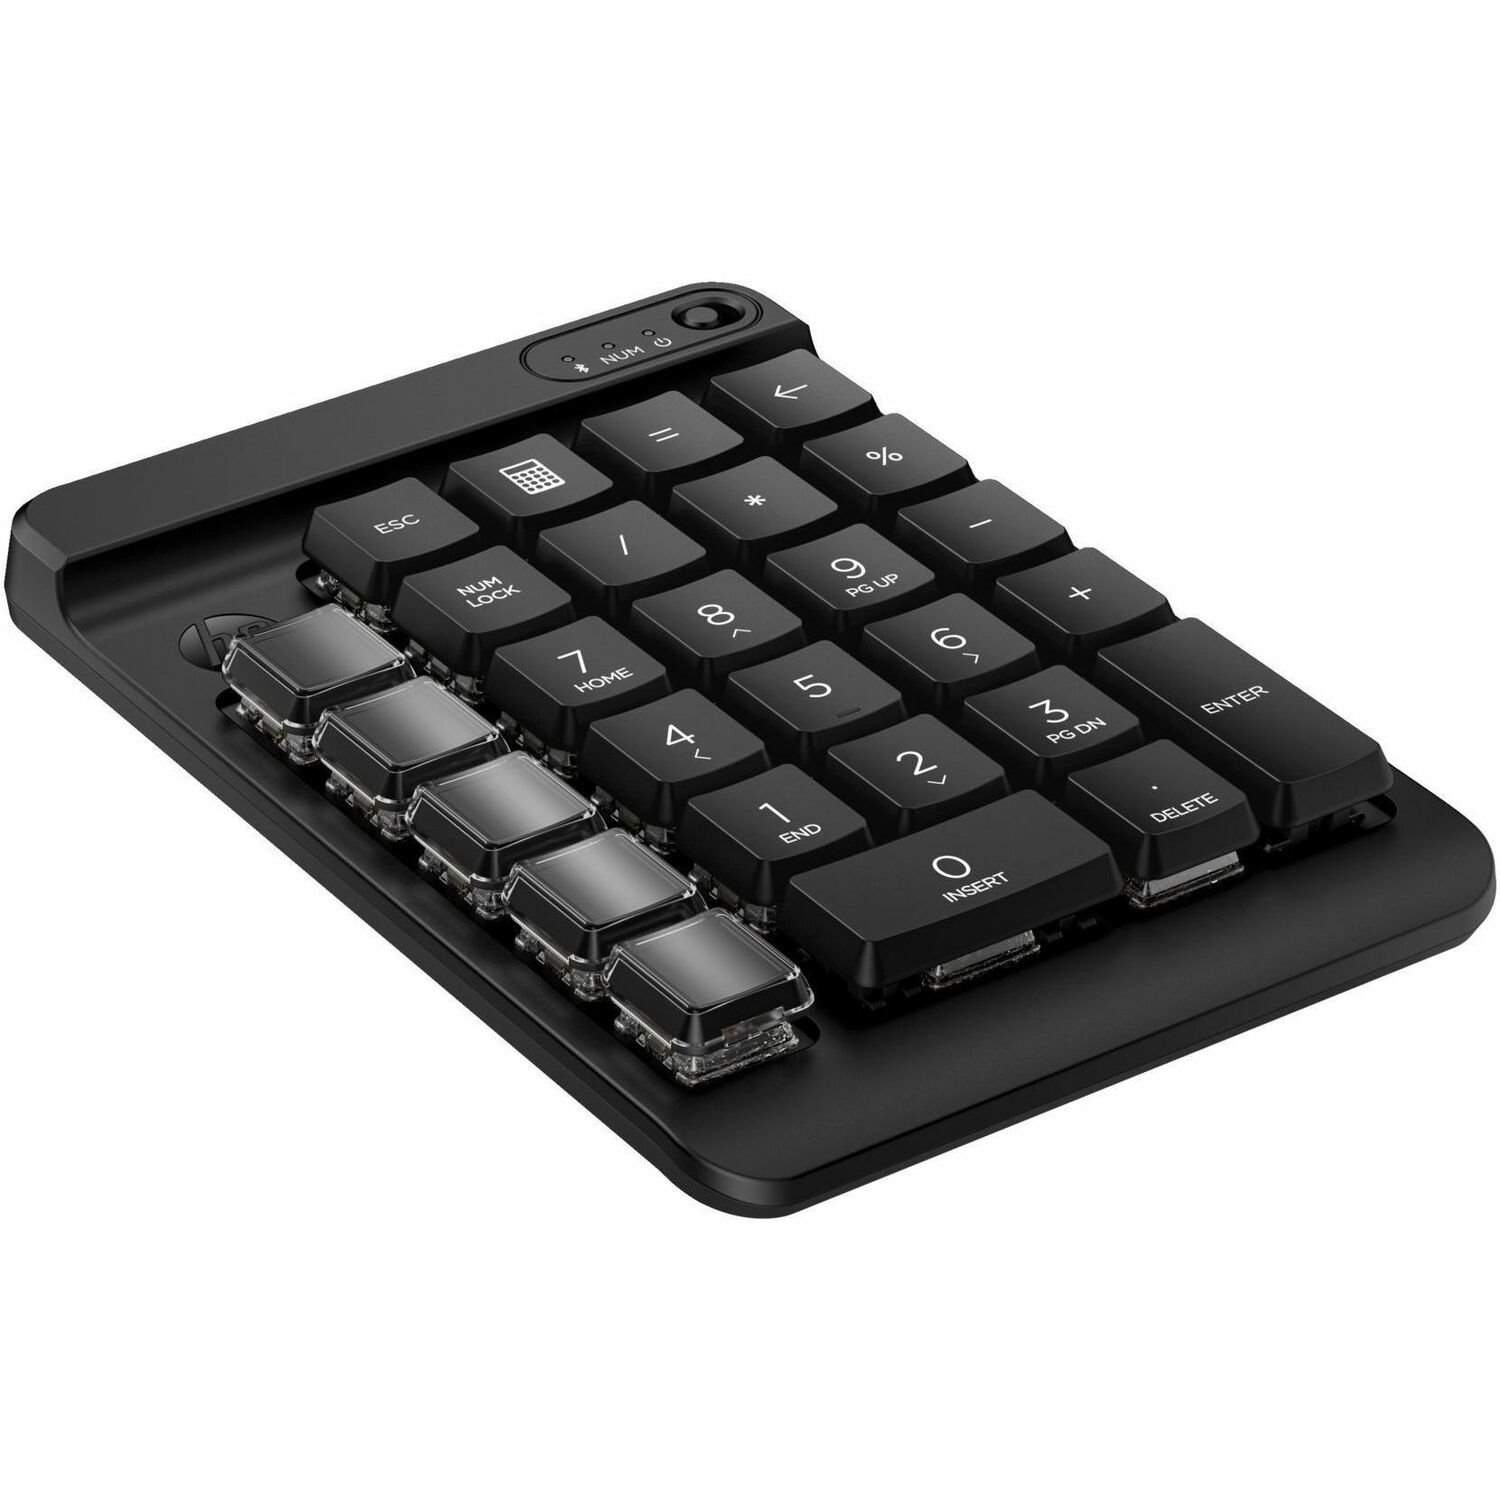 HP 435 Keypad - Wireless Connectivity - Black